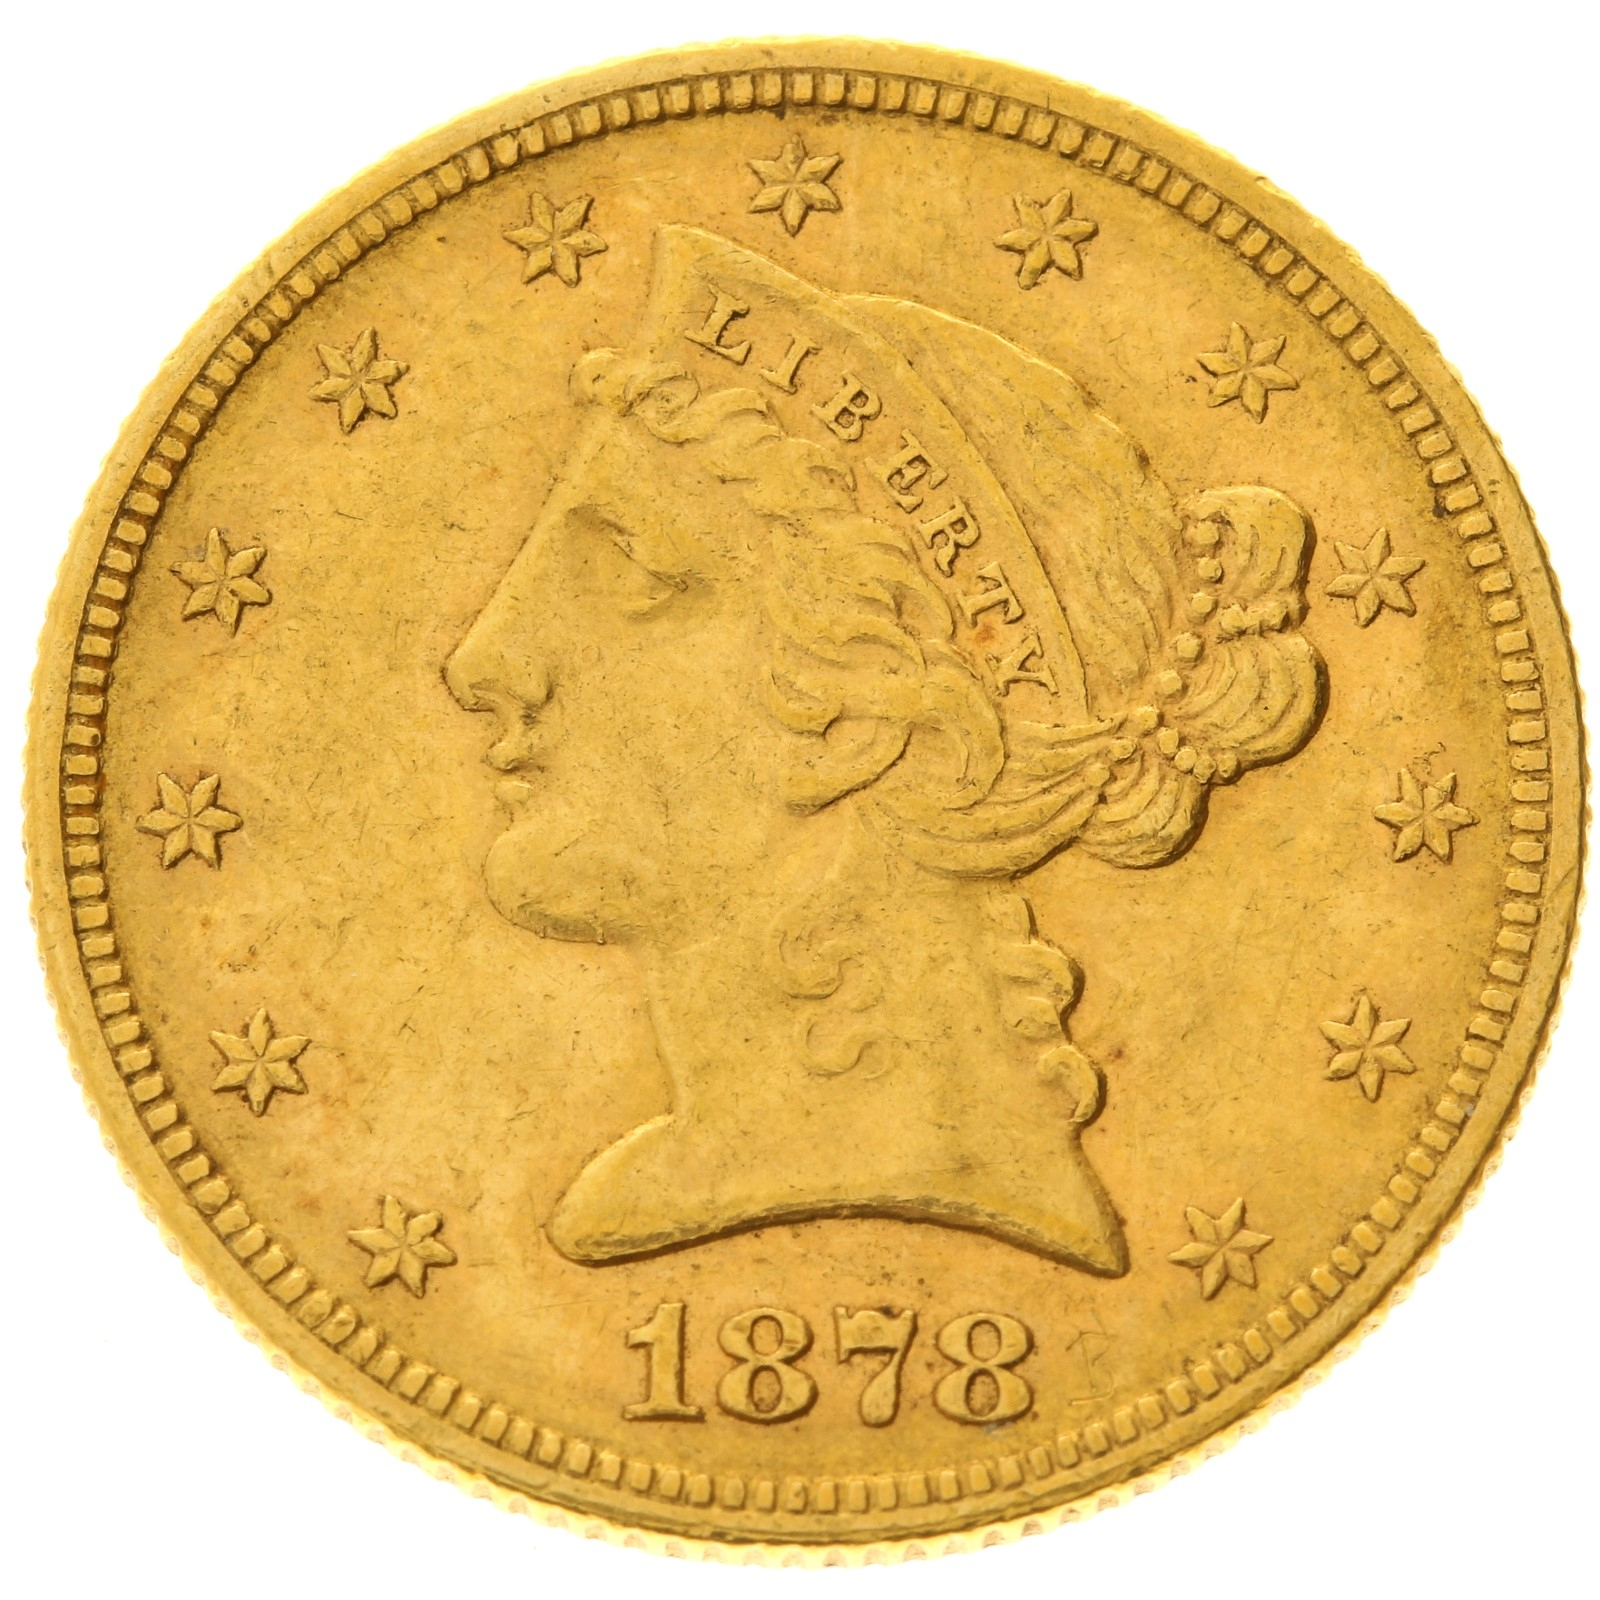 USA - 5 dollars - 1878 - S - Liberty / Coronet Head